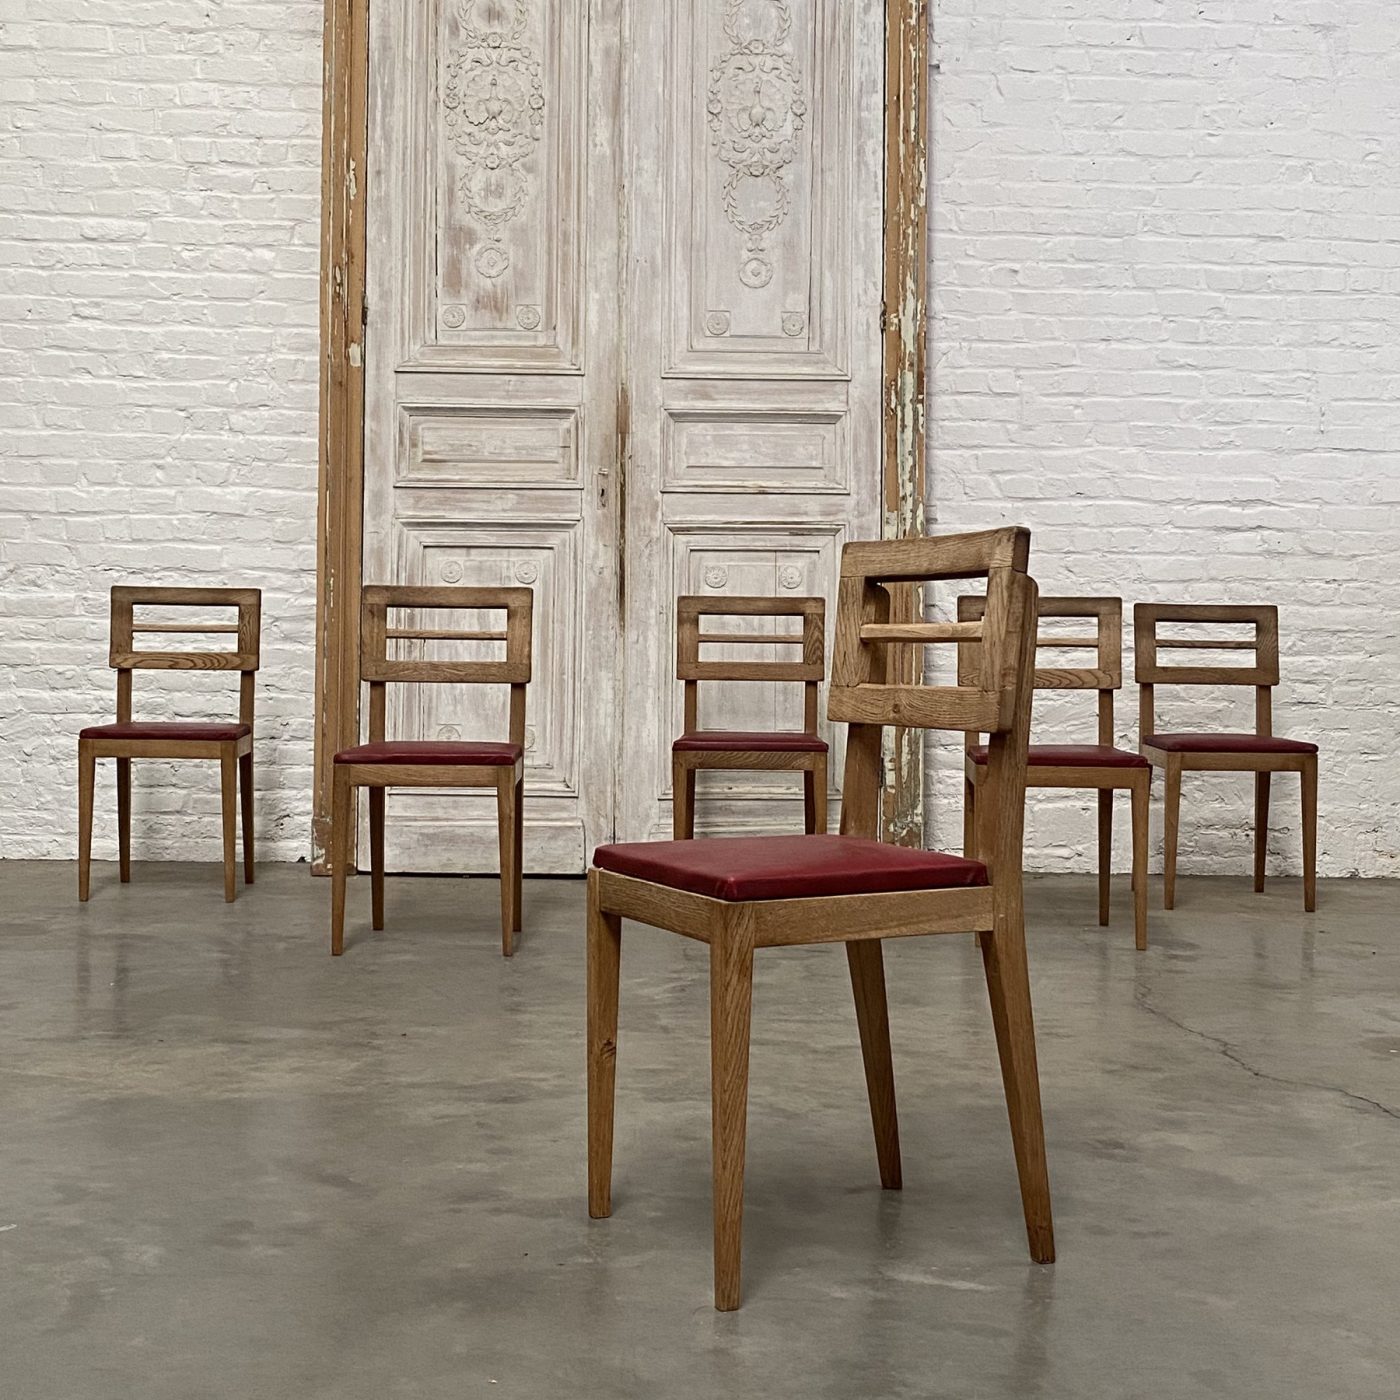 objet-vagabond-oak-chairs0001